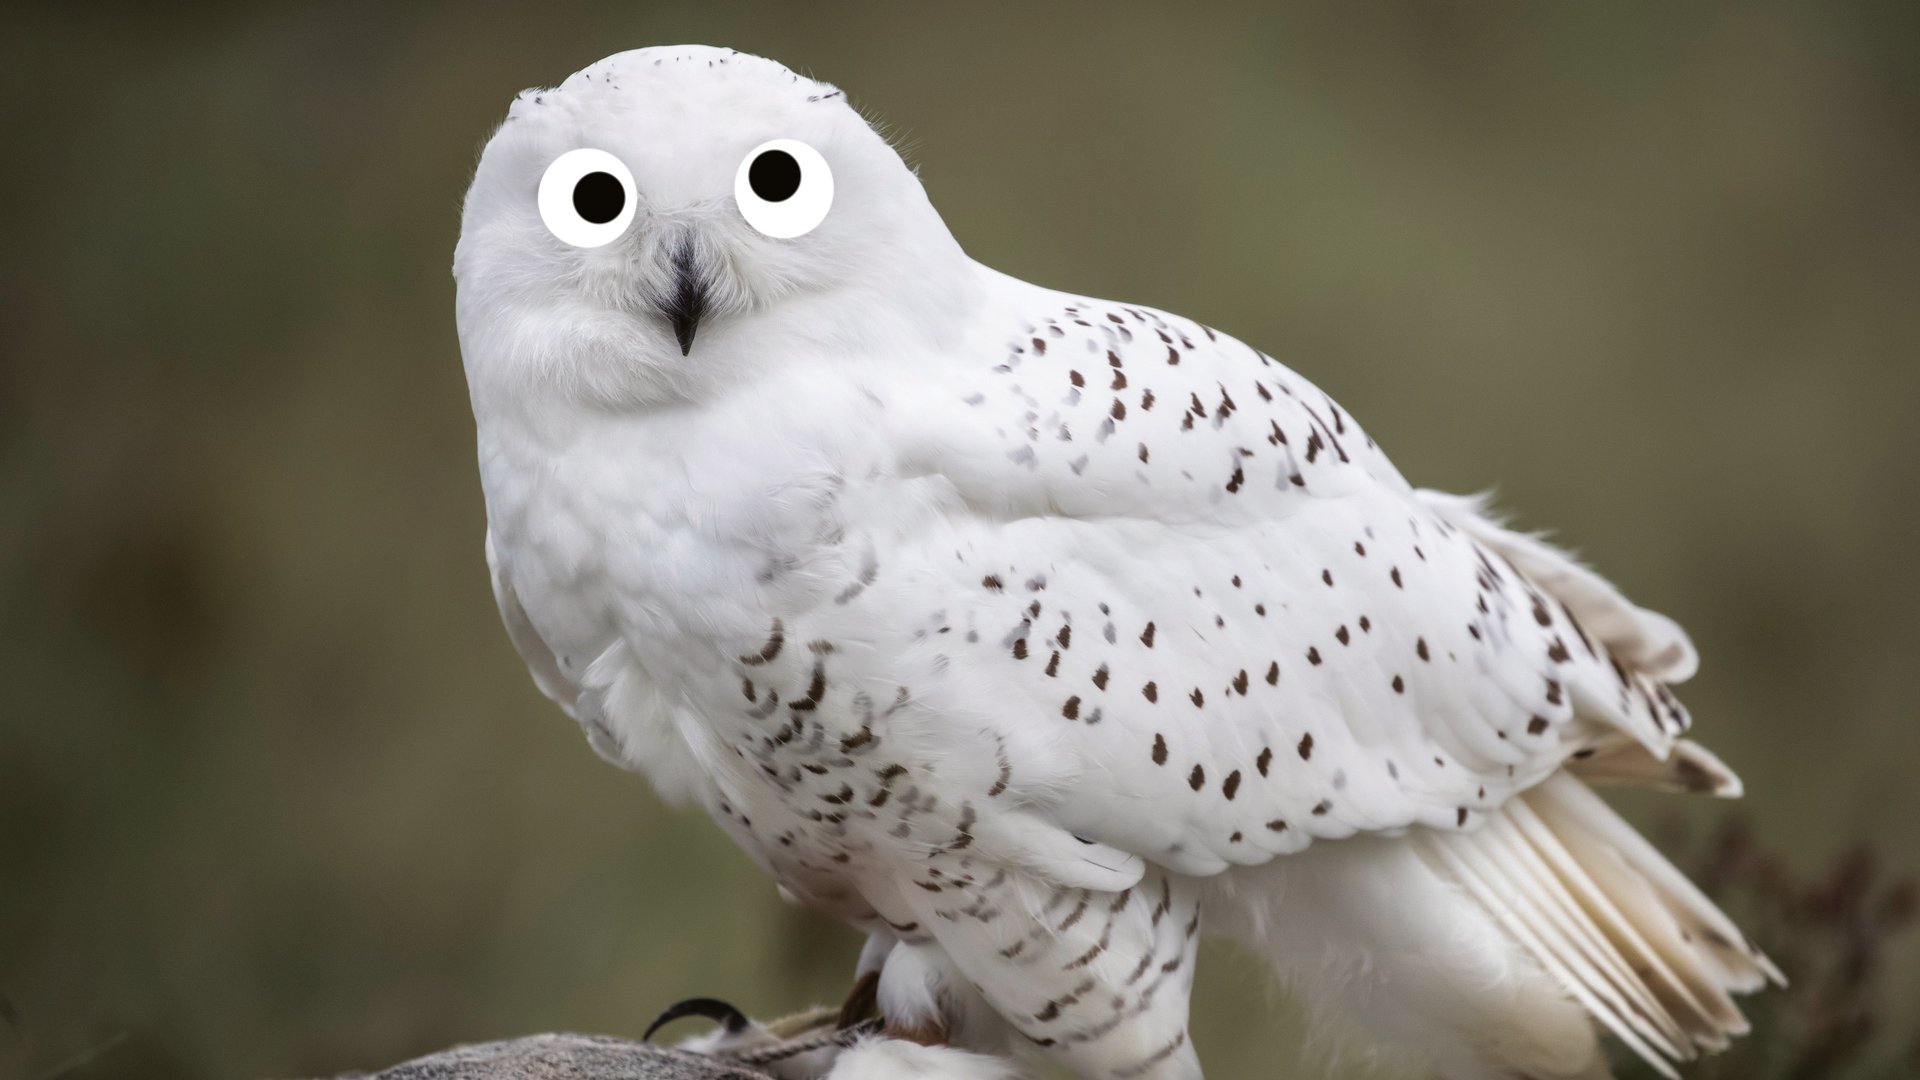 A snowy white owl